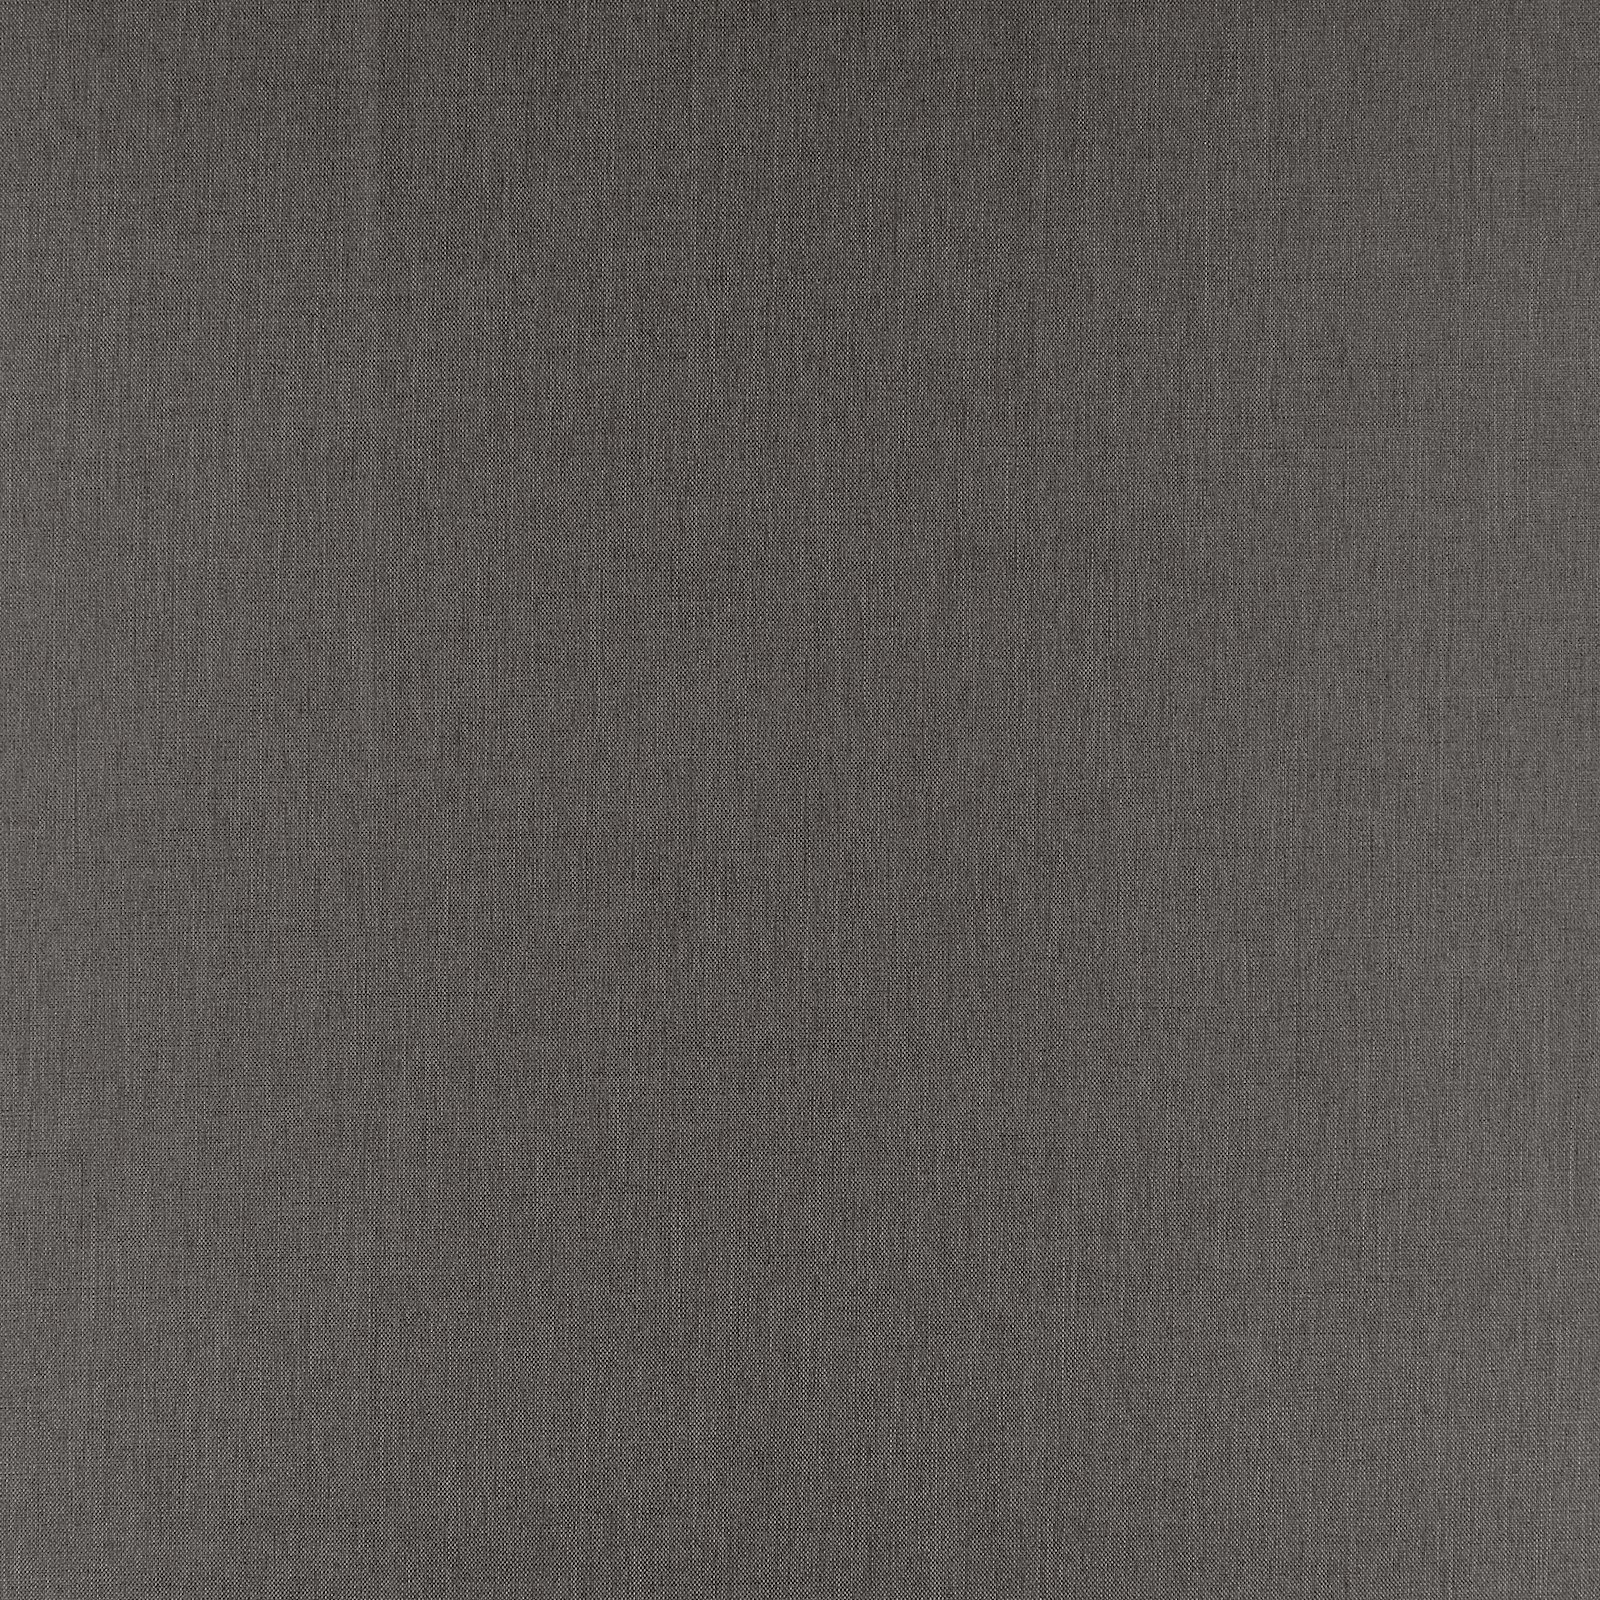 Upholstery fabric dark varm grey melange 826570_pack_solid